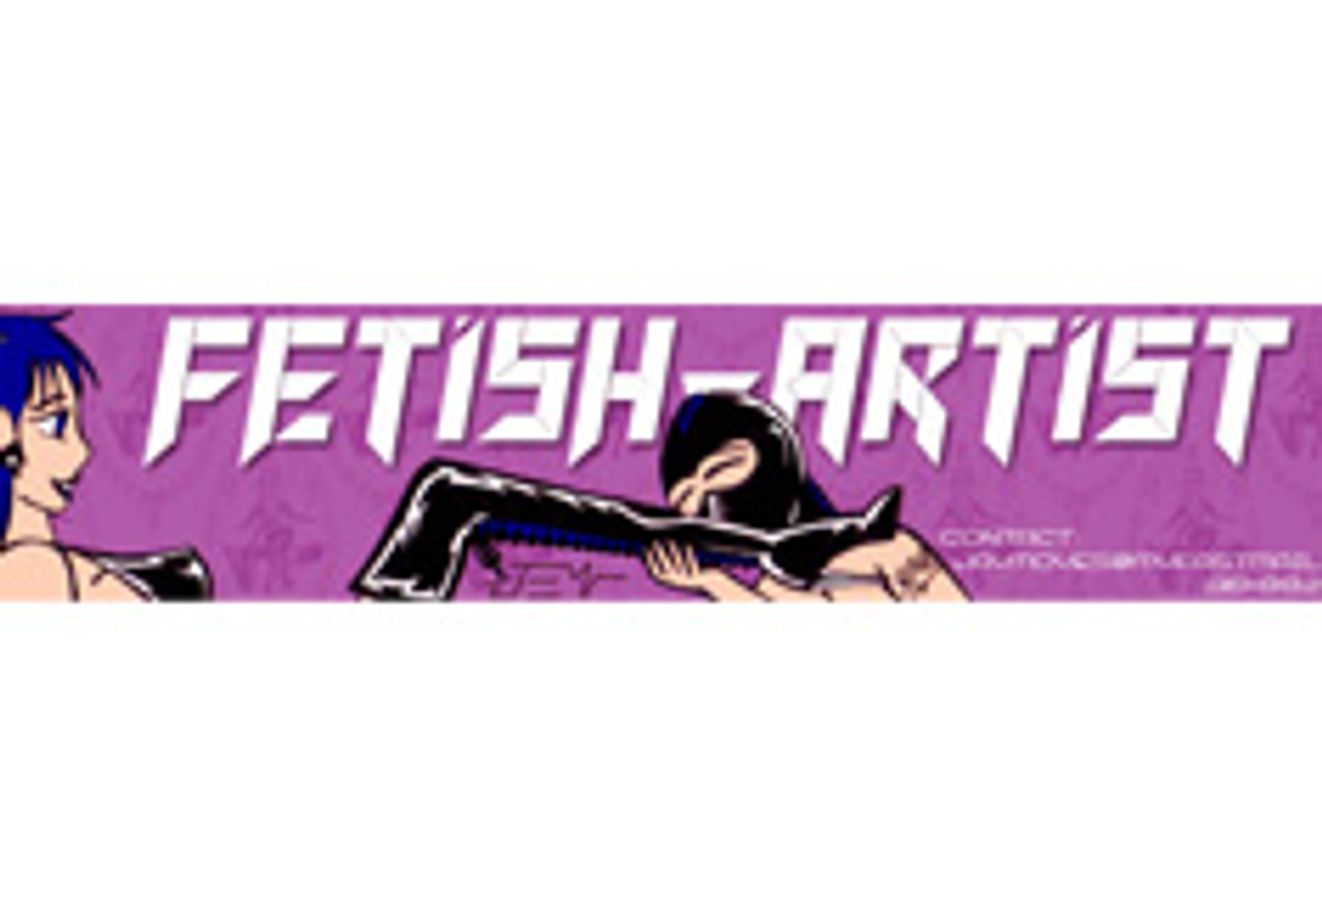 Fetish-Artist.com